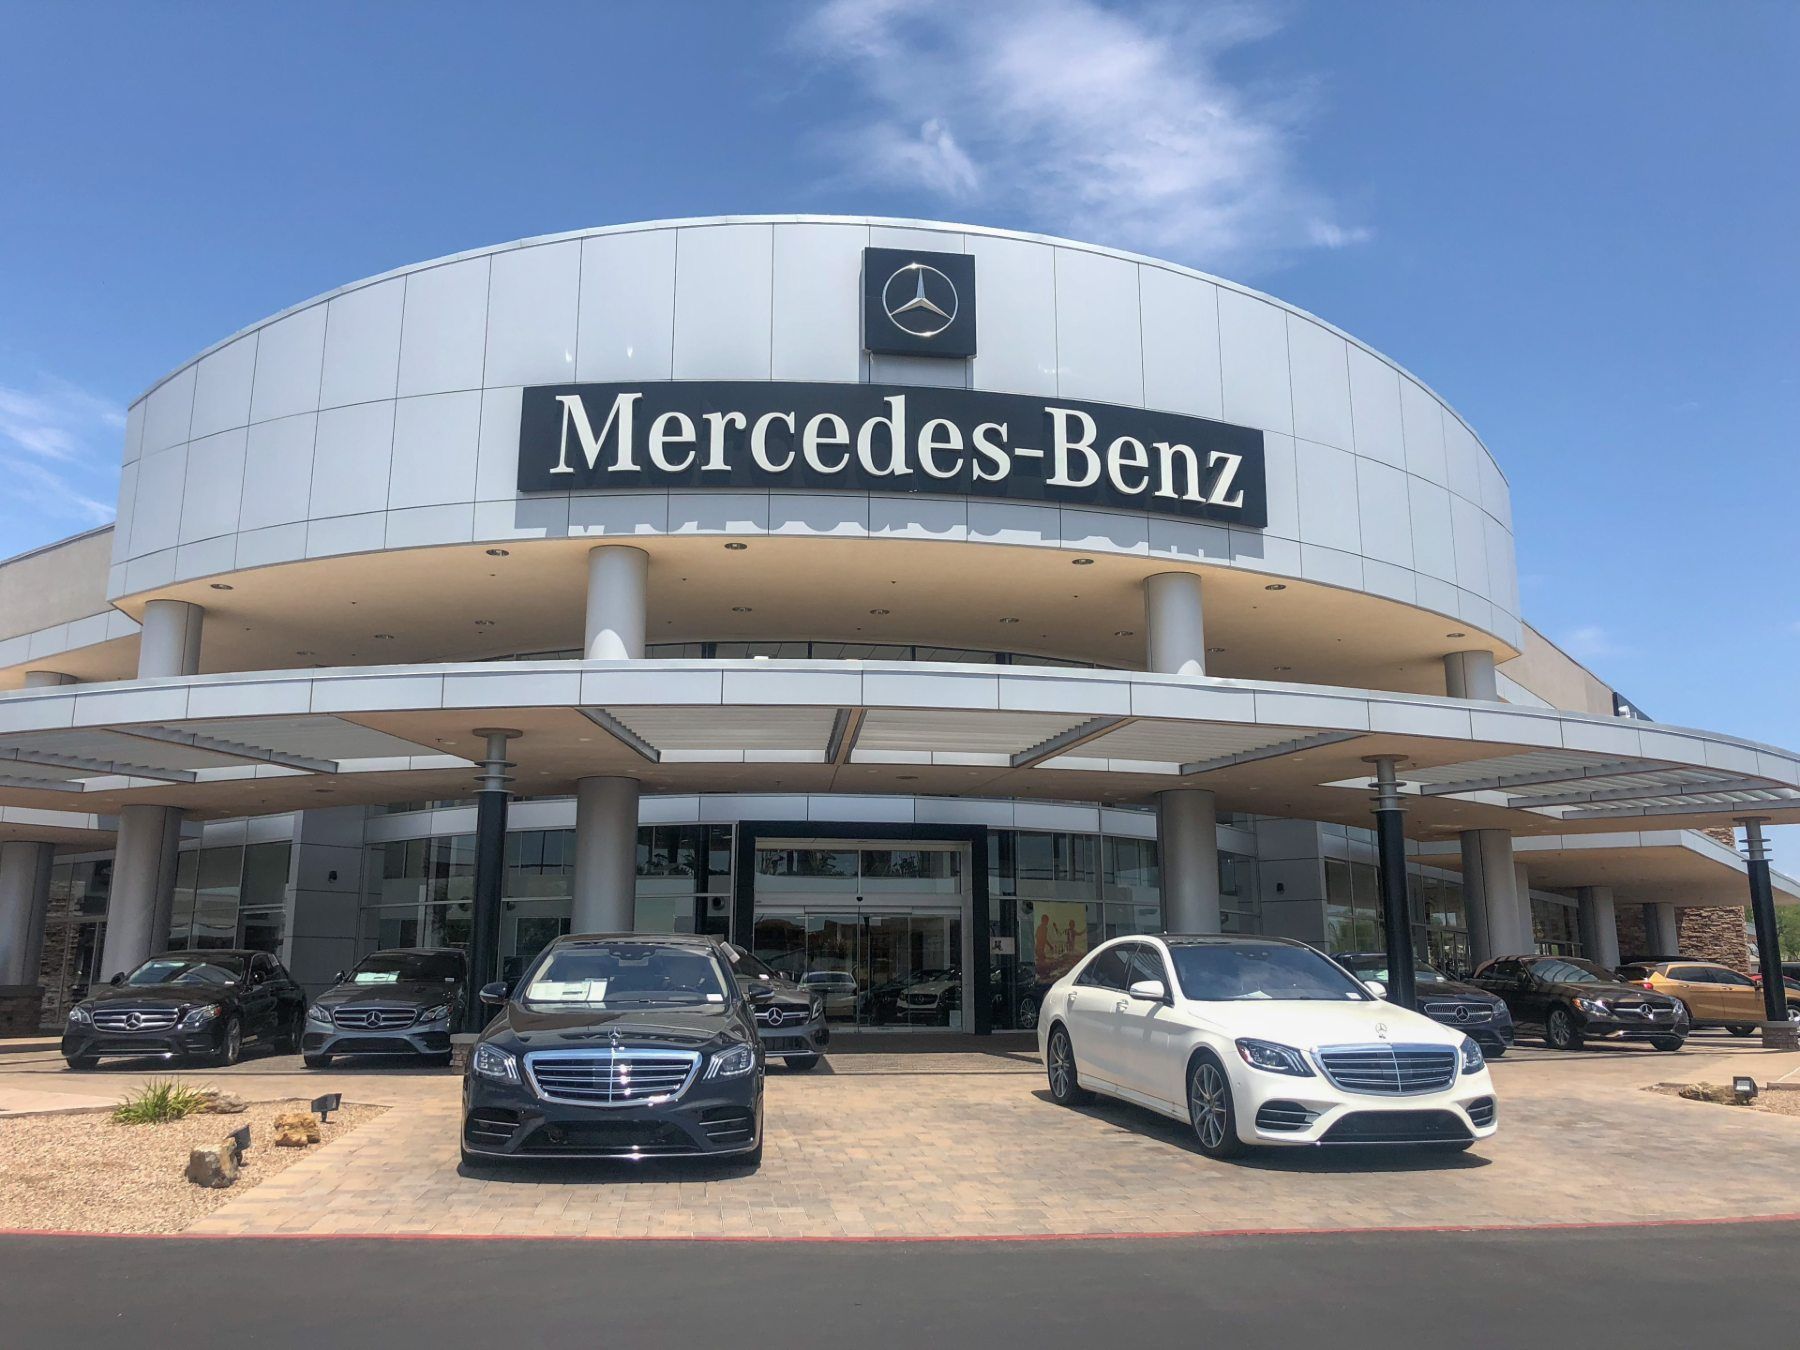 Mercedes-Benz dealership - mercedes recall